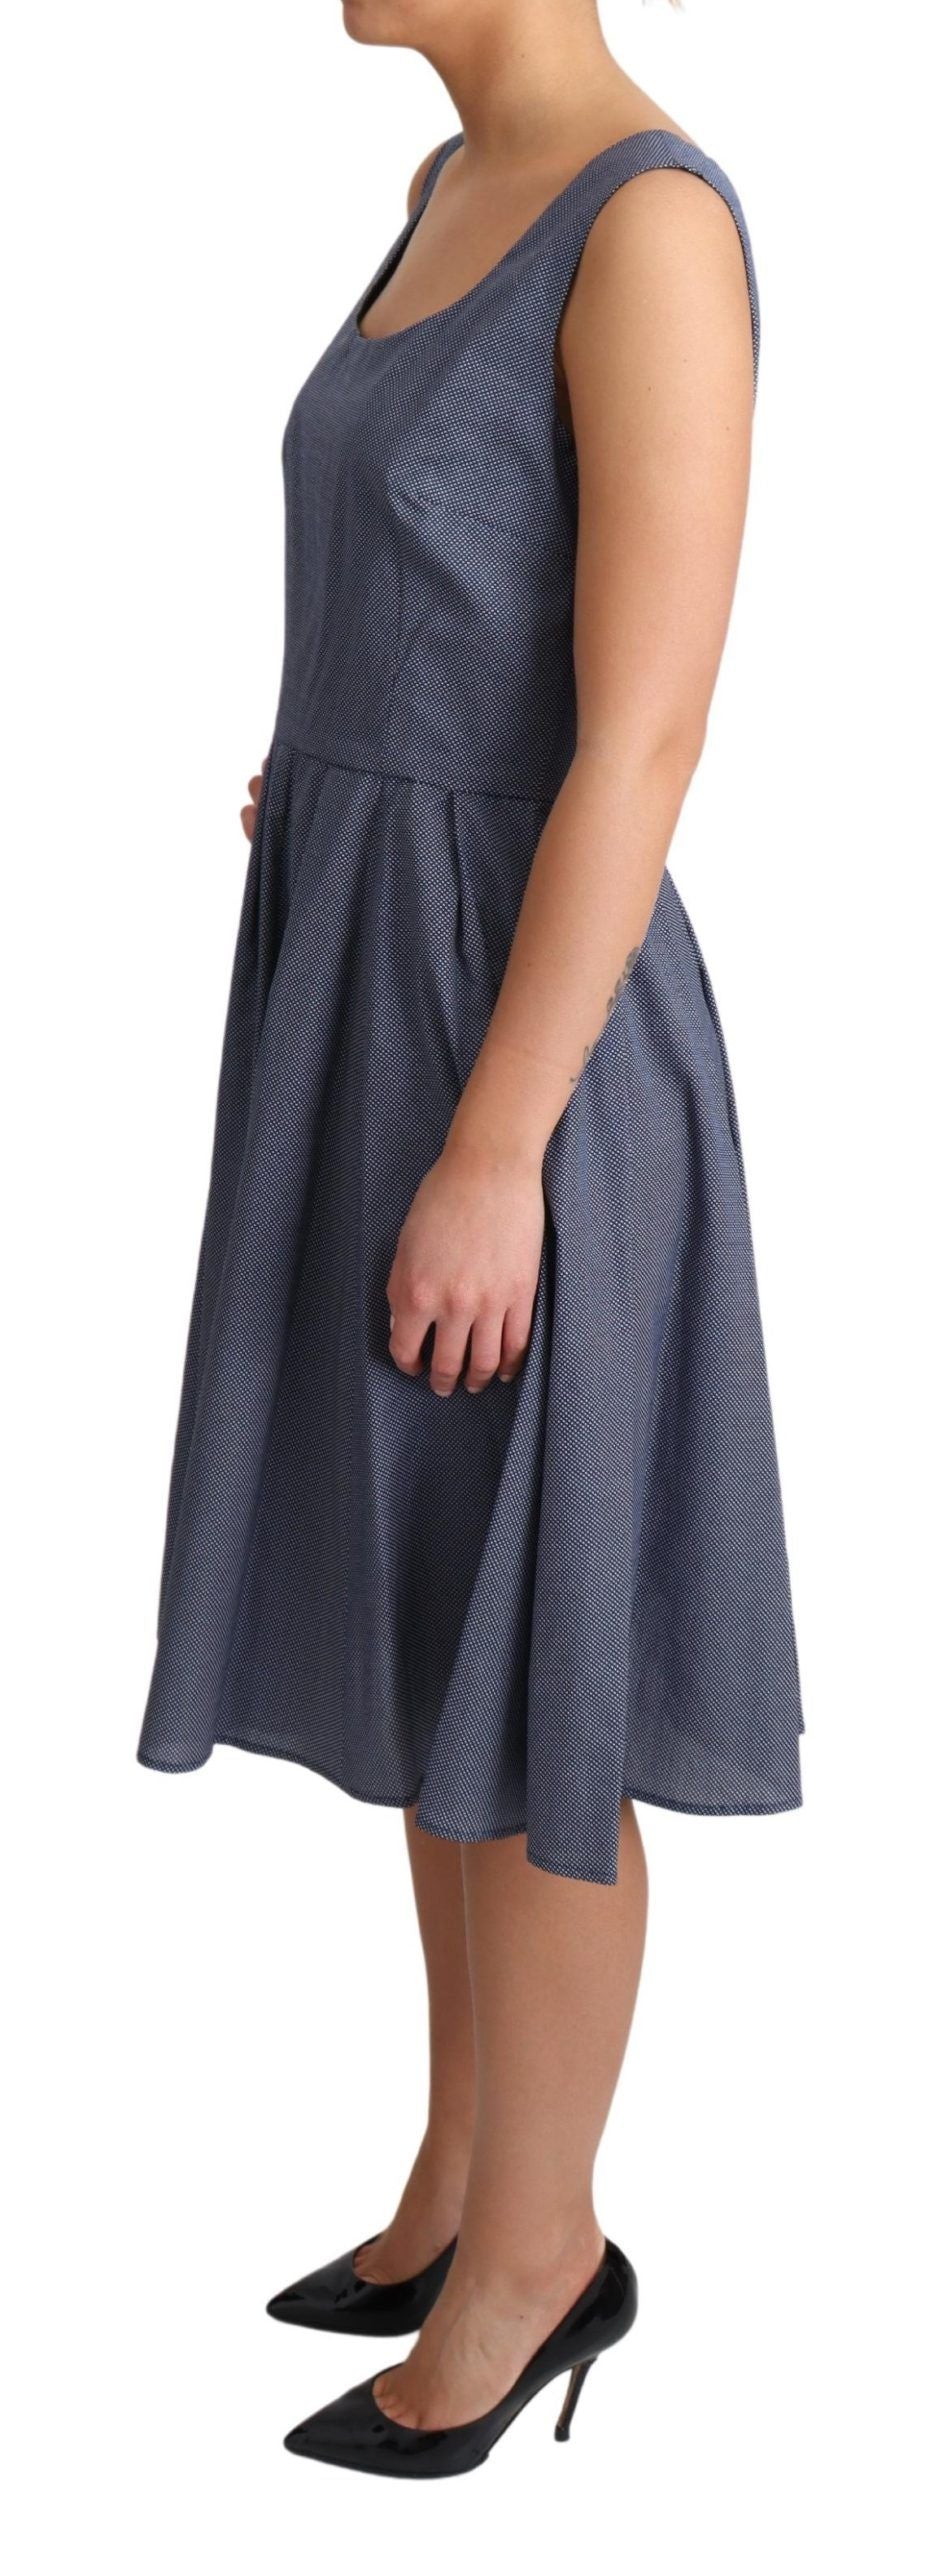 Dolce & Gabbana Chic Blue Polka-Dotted Sleeveless A-Line Dress